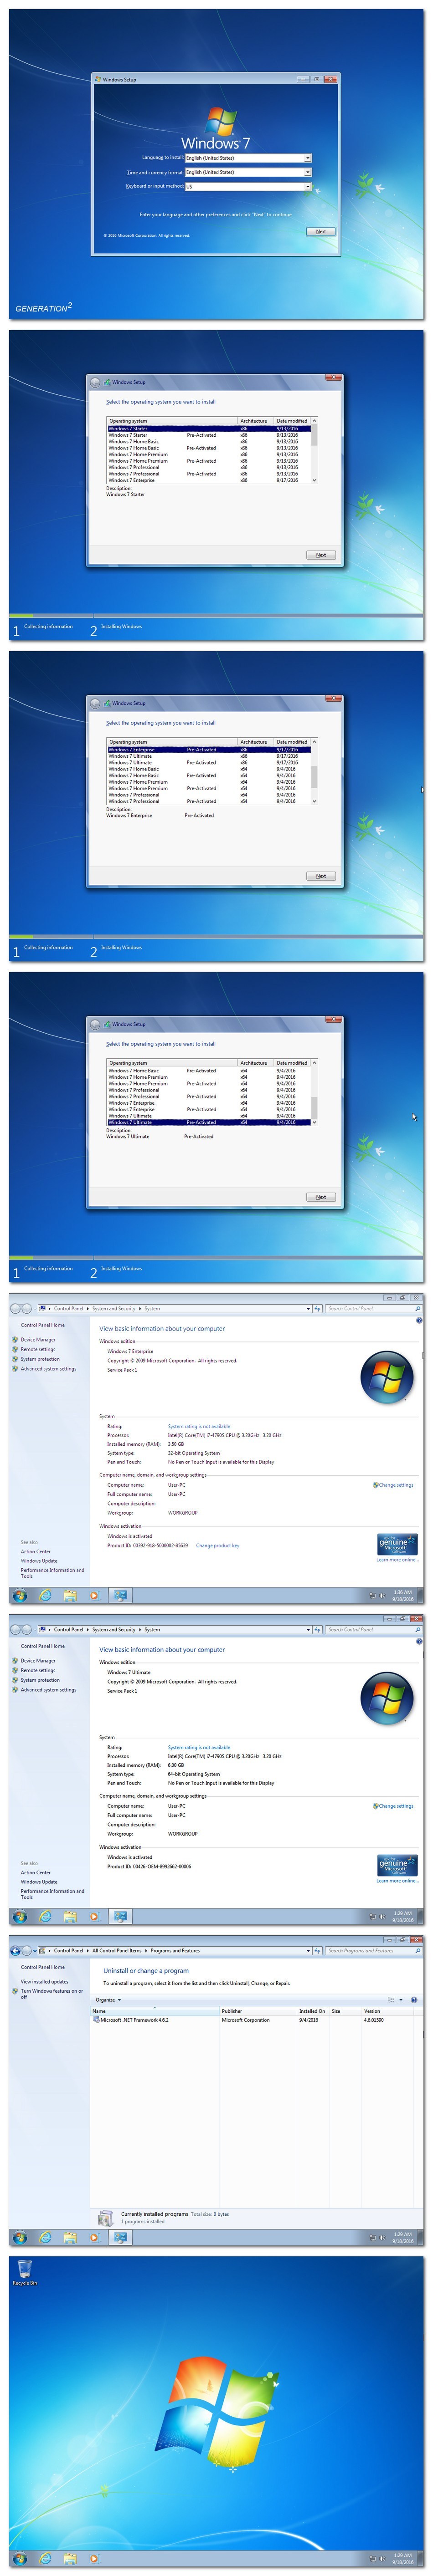 Windows 7 aio pre-activated r2 download